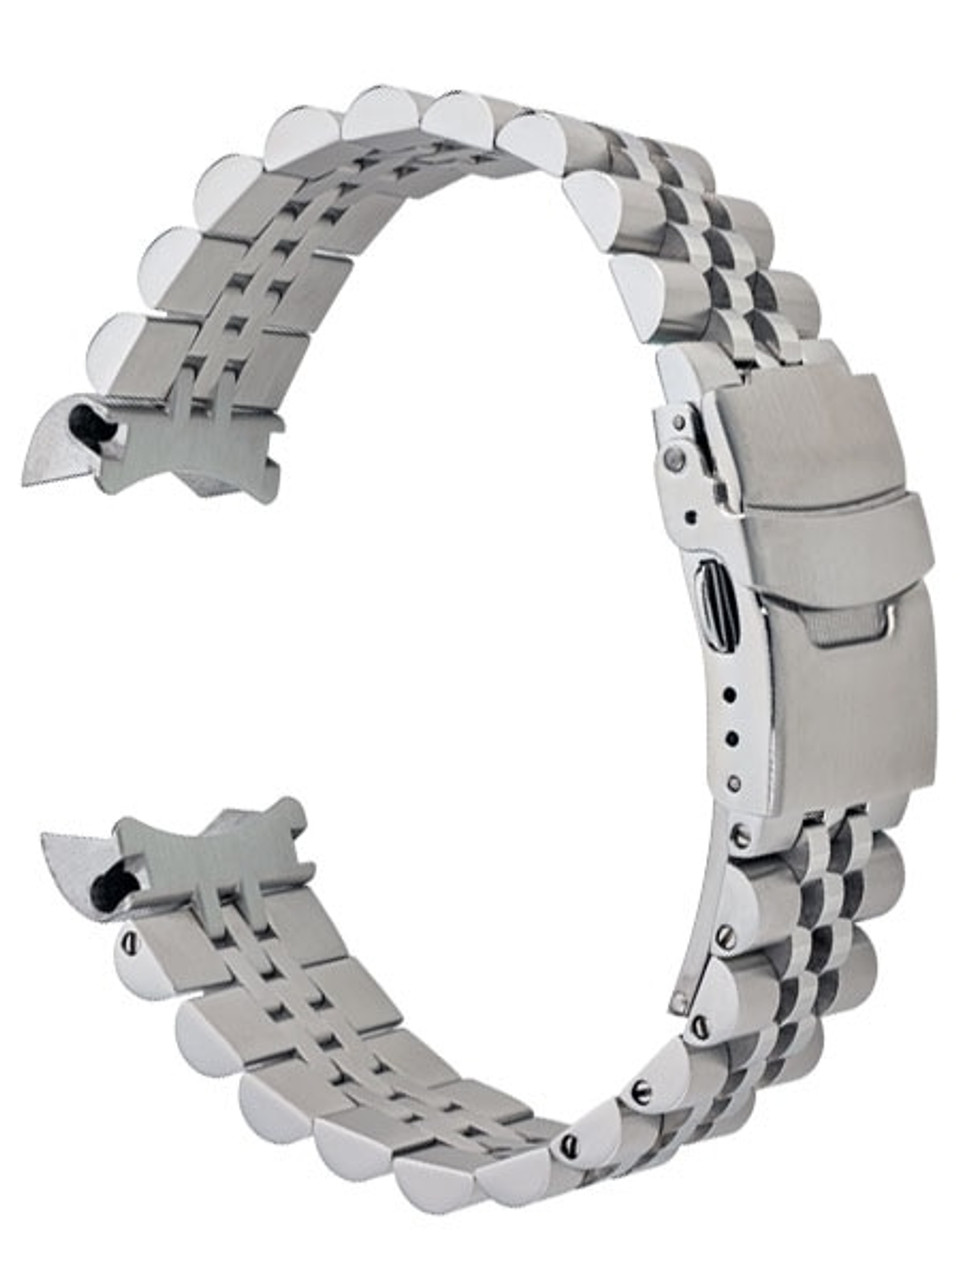 John Galt on X: Seiko Turtle mods. New bracelet. Love this watch